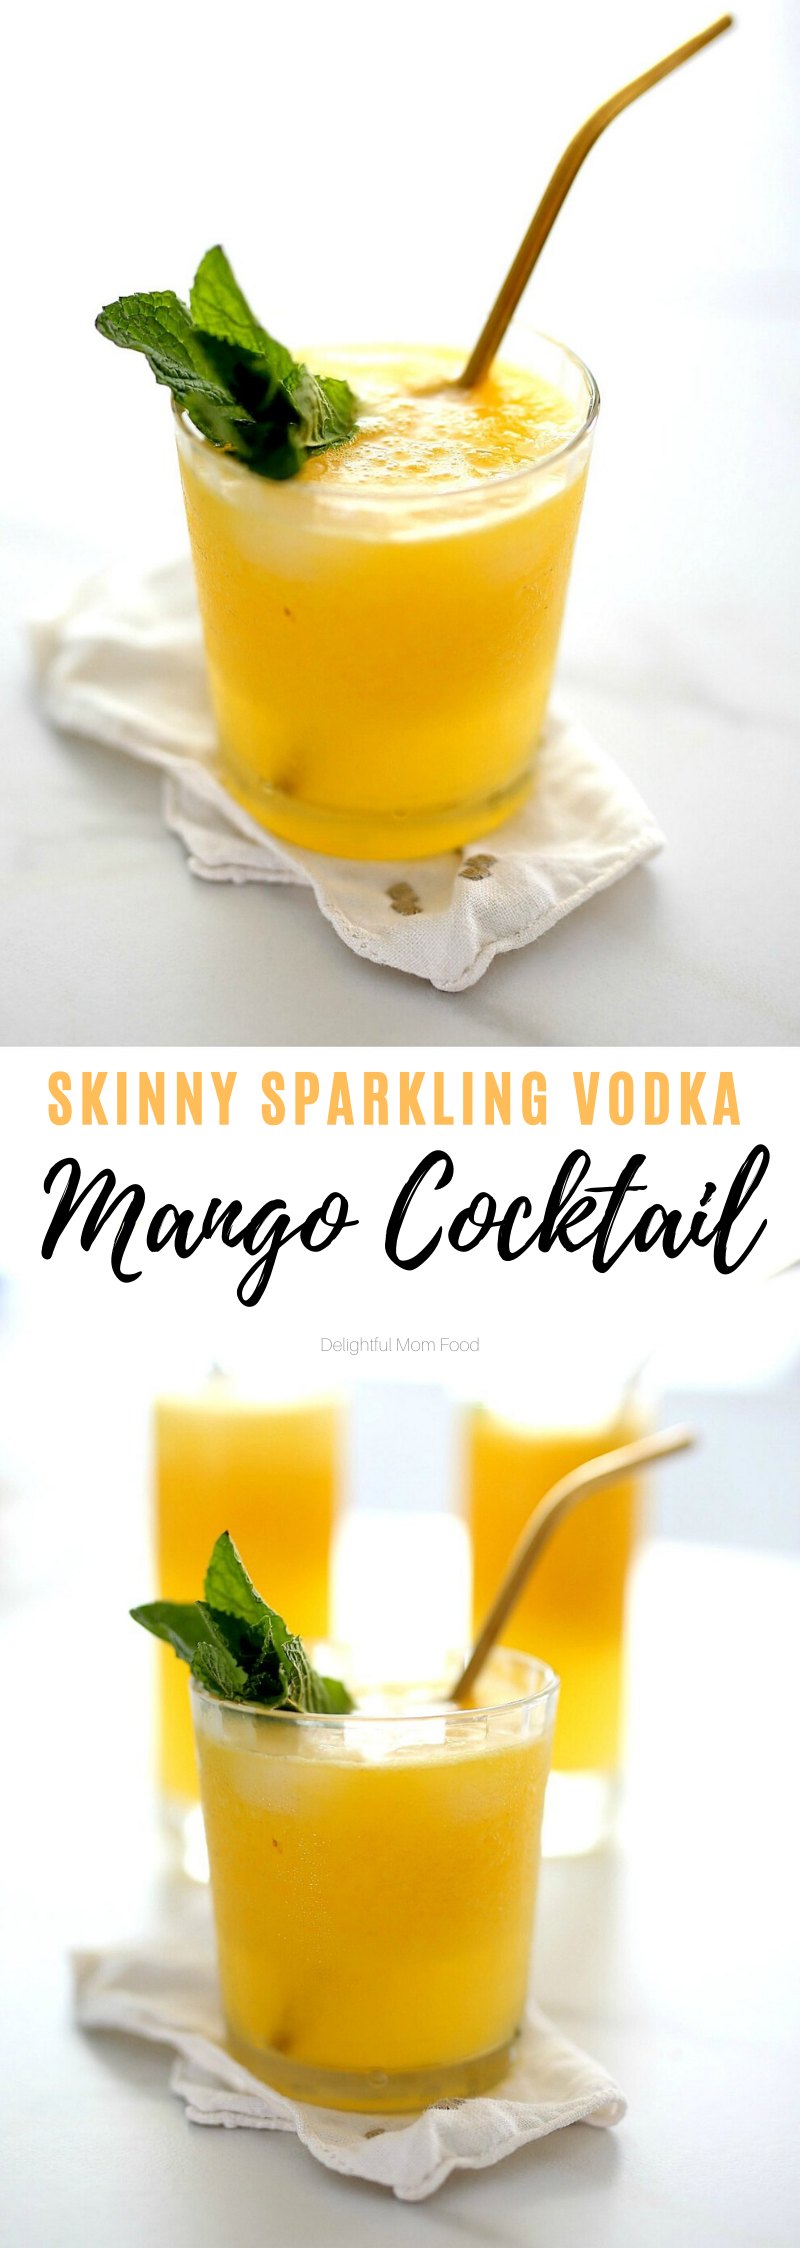 Skinny Mango Cocktail Vodka Drink - Delightful Mom Food